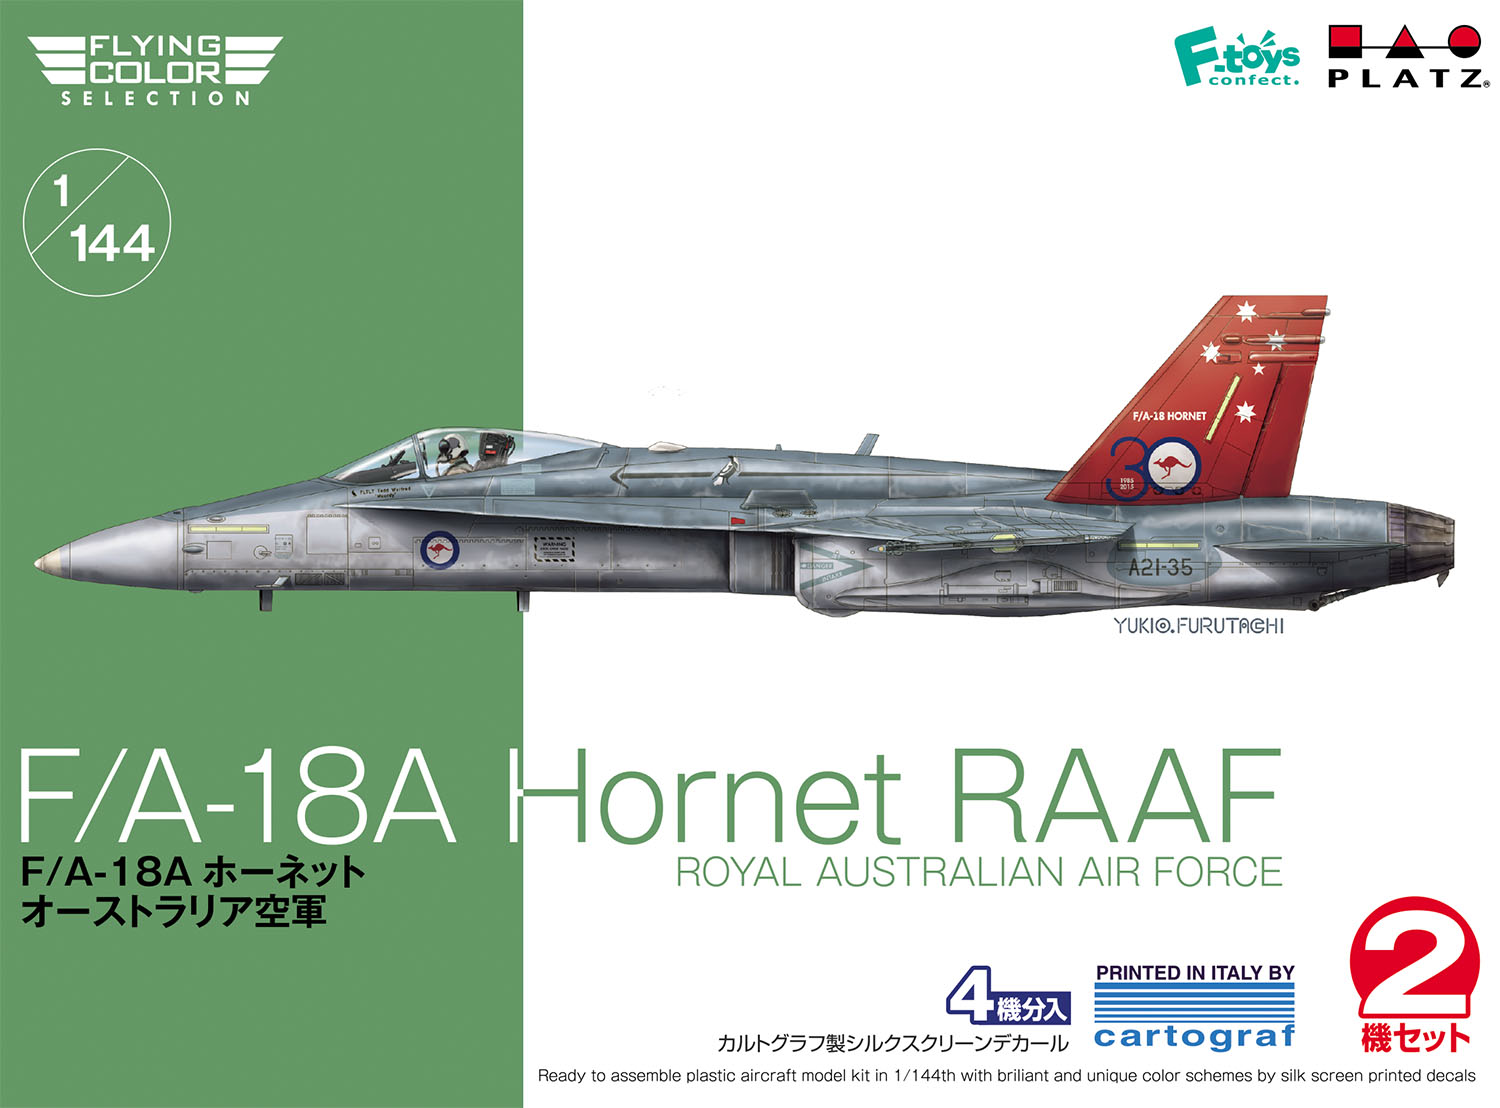 1/144 F/A-18A ホーネット オーストラリア空軍 2機セット | 鉄道模型・プラモデル・ラジコン・ガン・ミリタリー・フィギュア・ミニカー  玩具(おもちゃ) の通販サイト